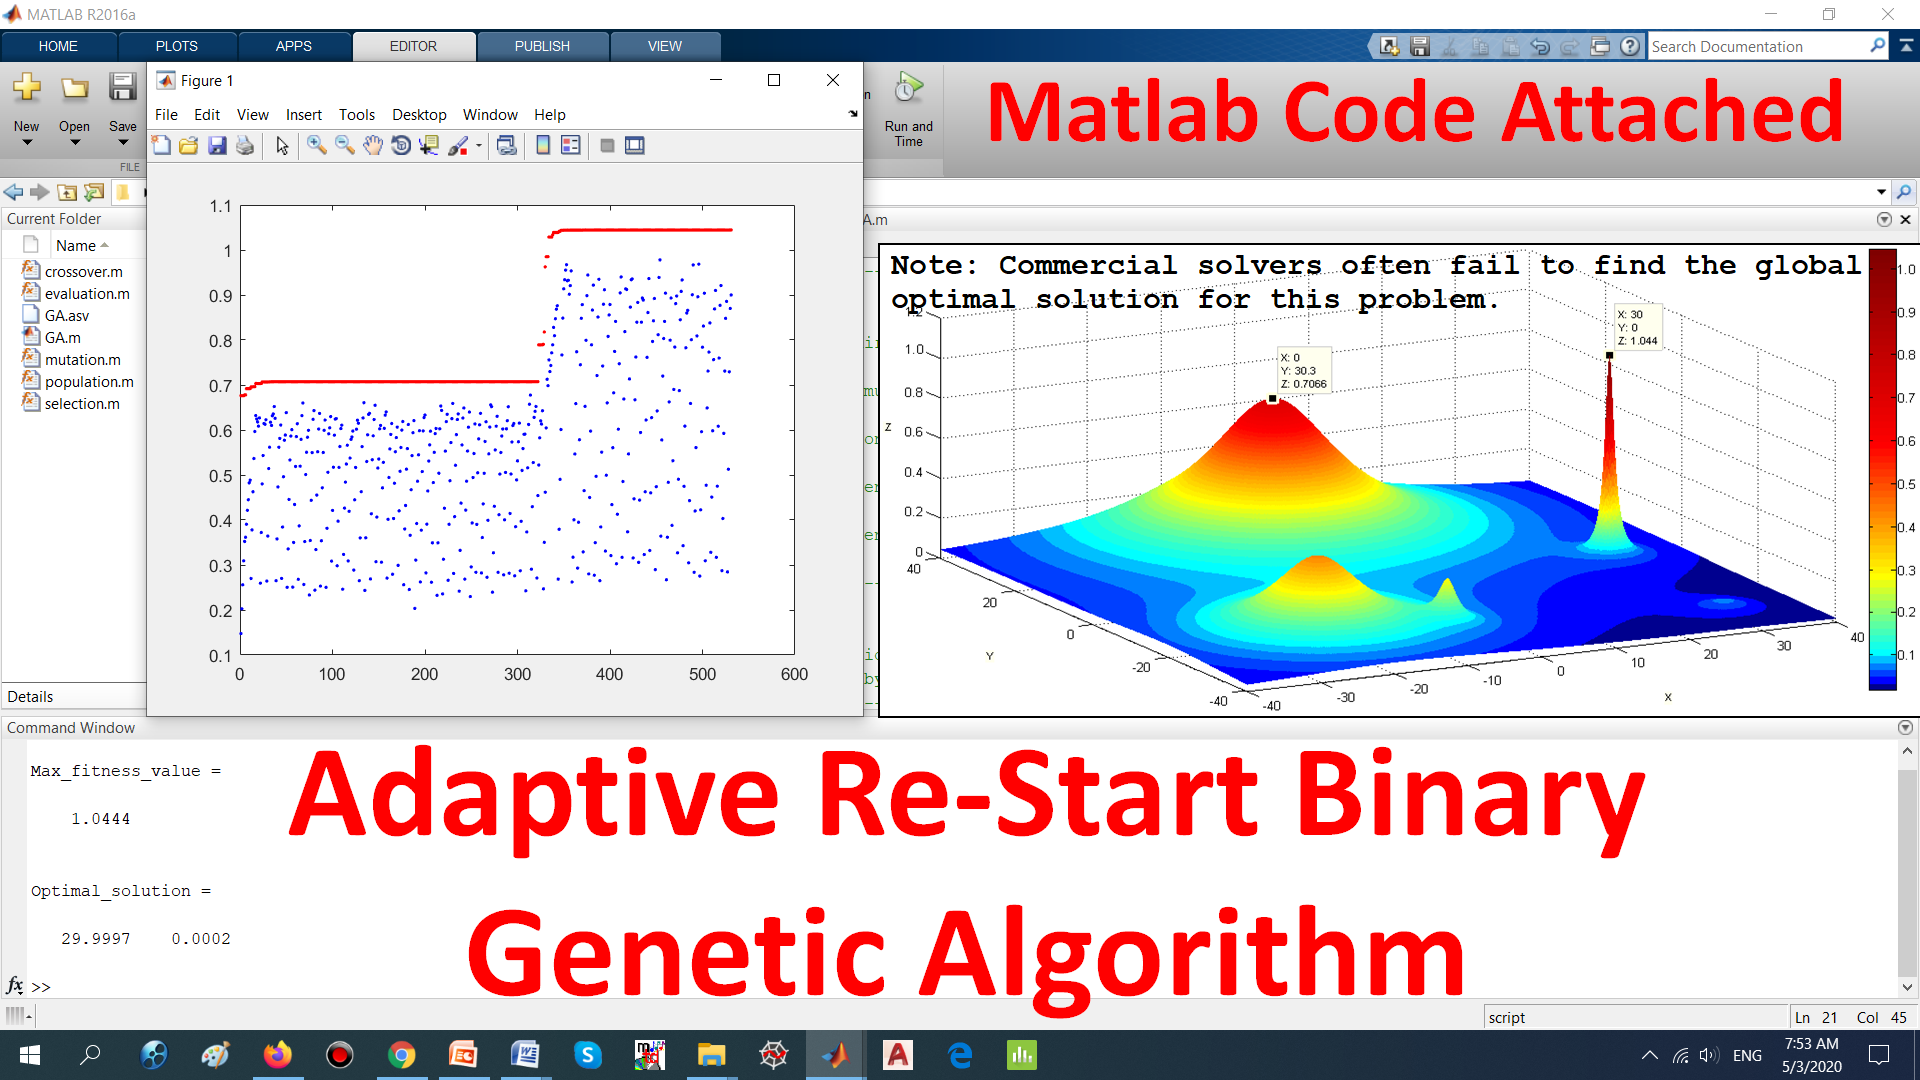 Adaptive Restart Binary Genetic Algorithm